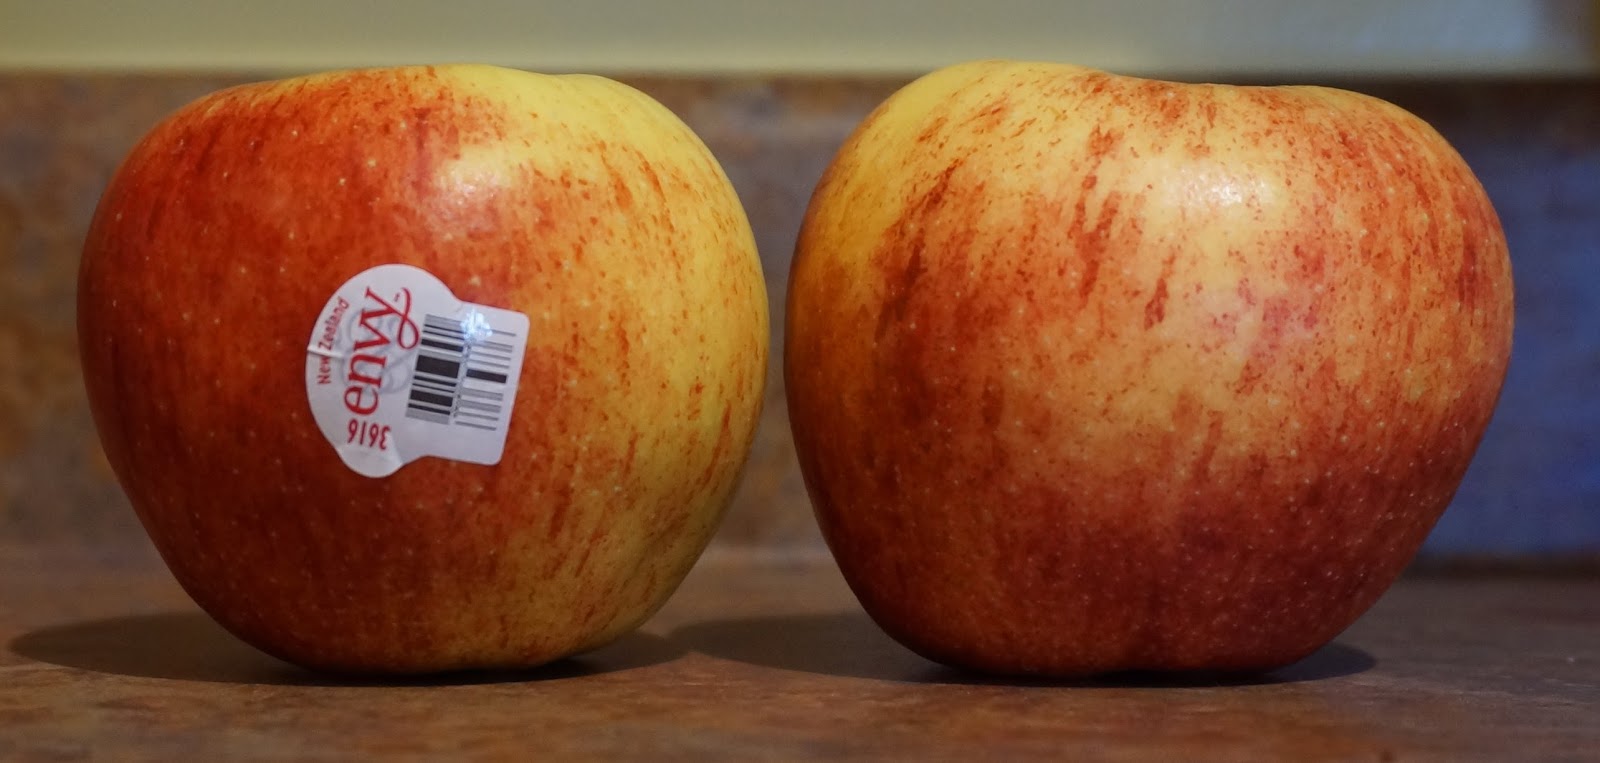 Exploring Trader Joe's: Envy apples